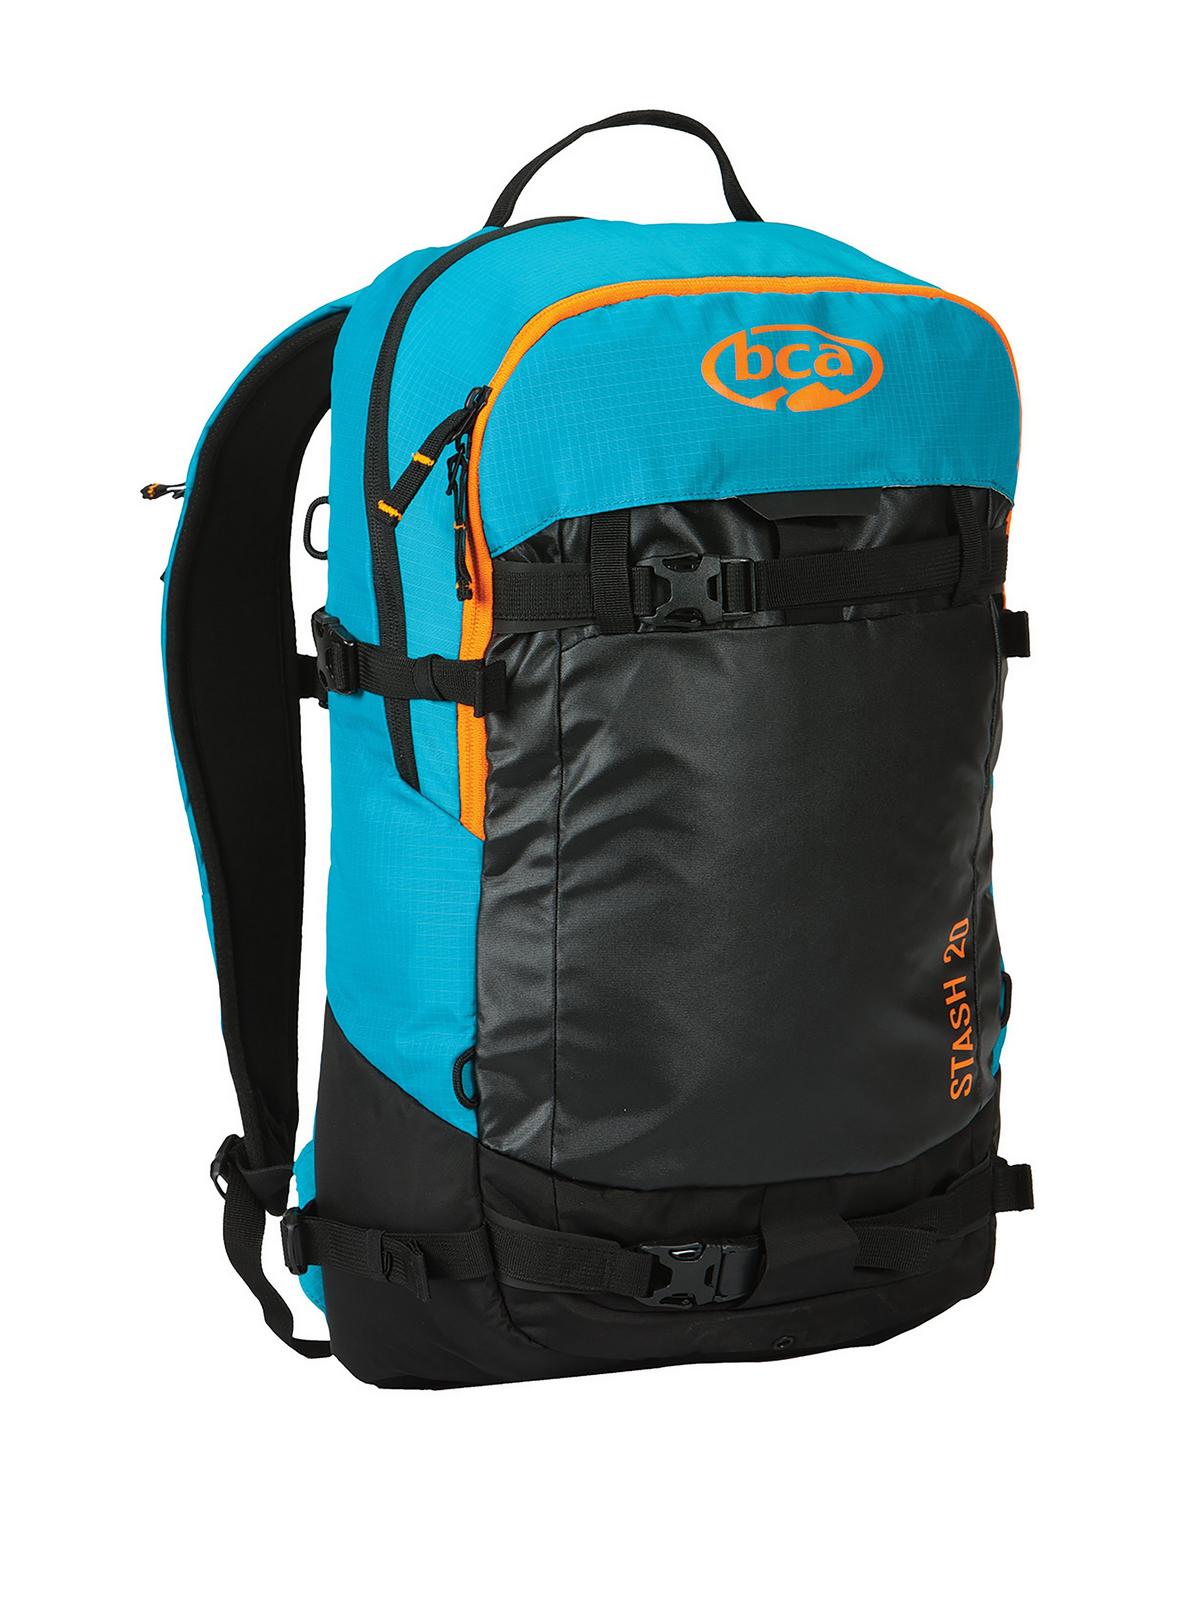 BCA Stash 20™ Backpack | Backcountry Access